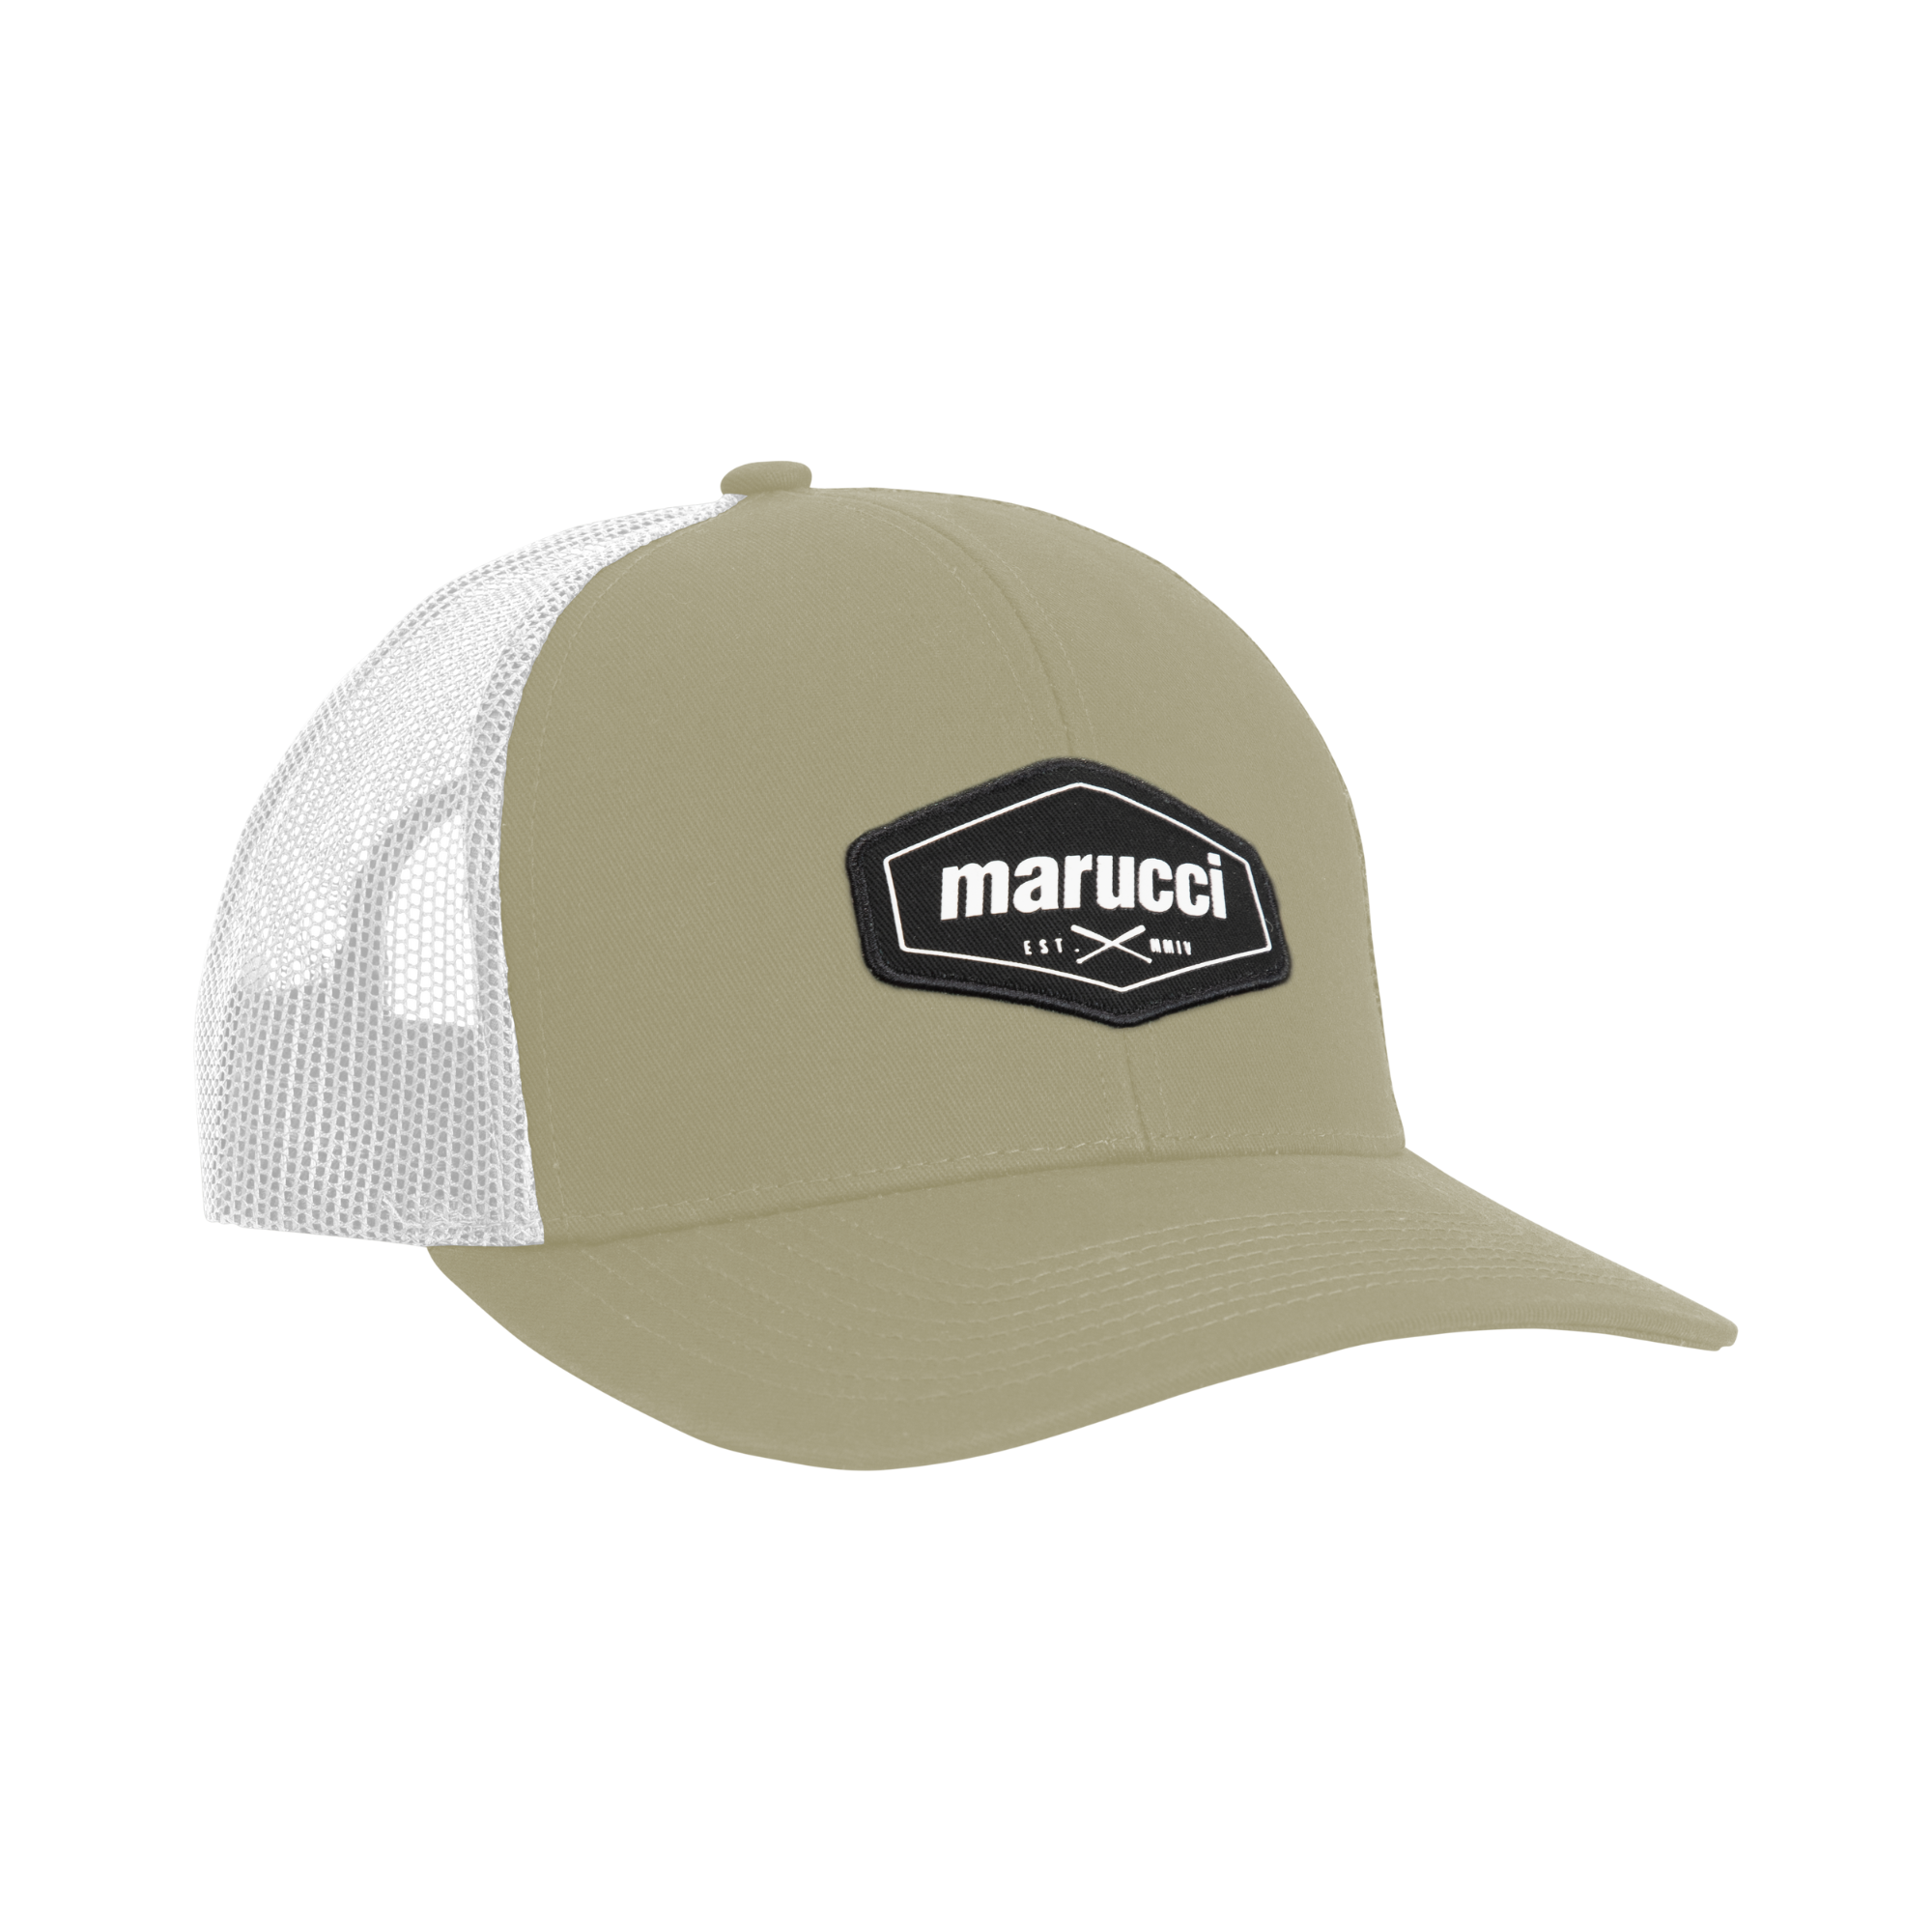 Marucci Fabric Cross Patch Trucker Hat Tan/White